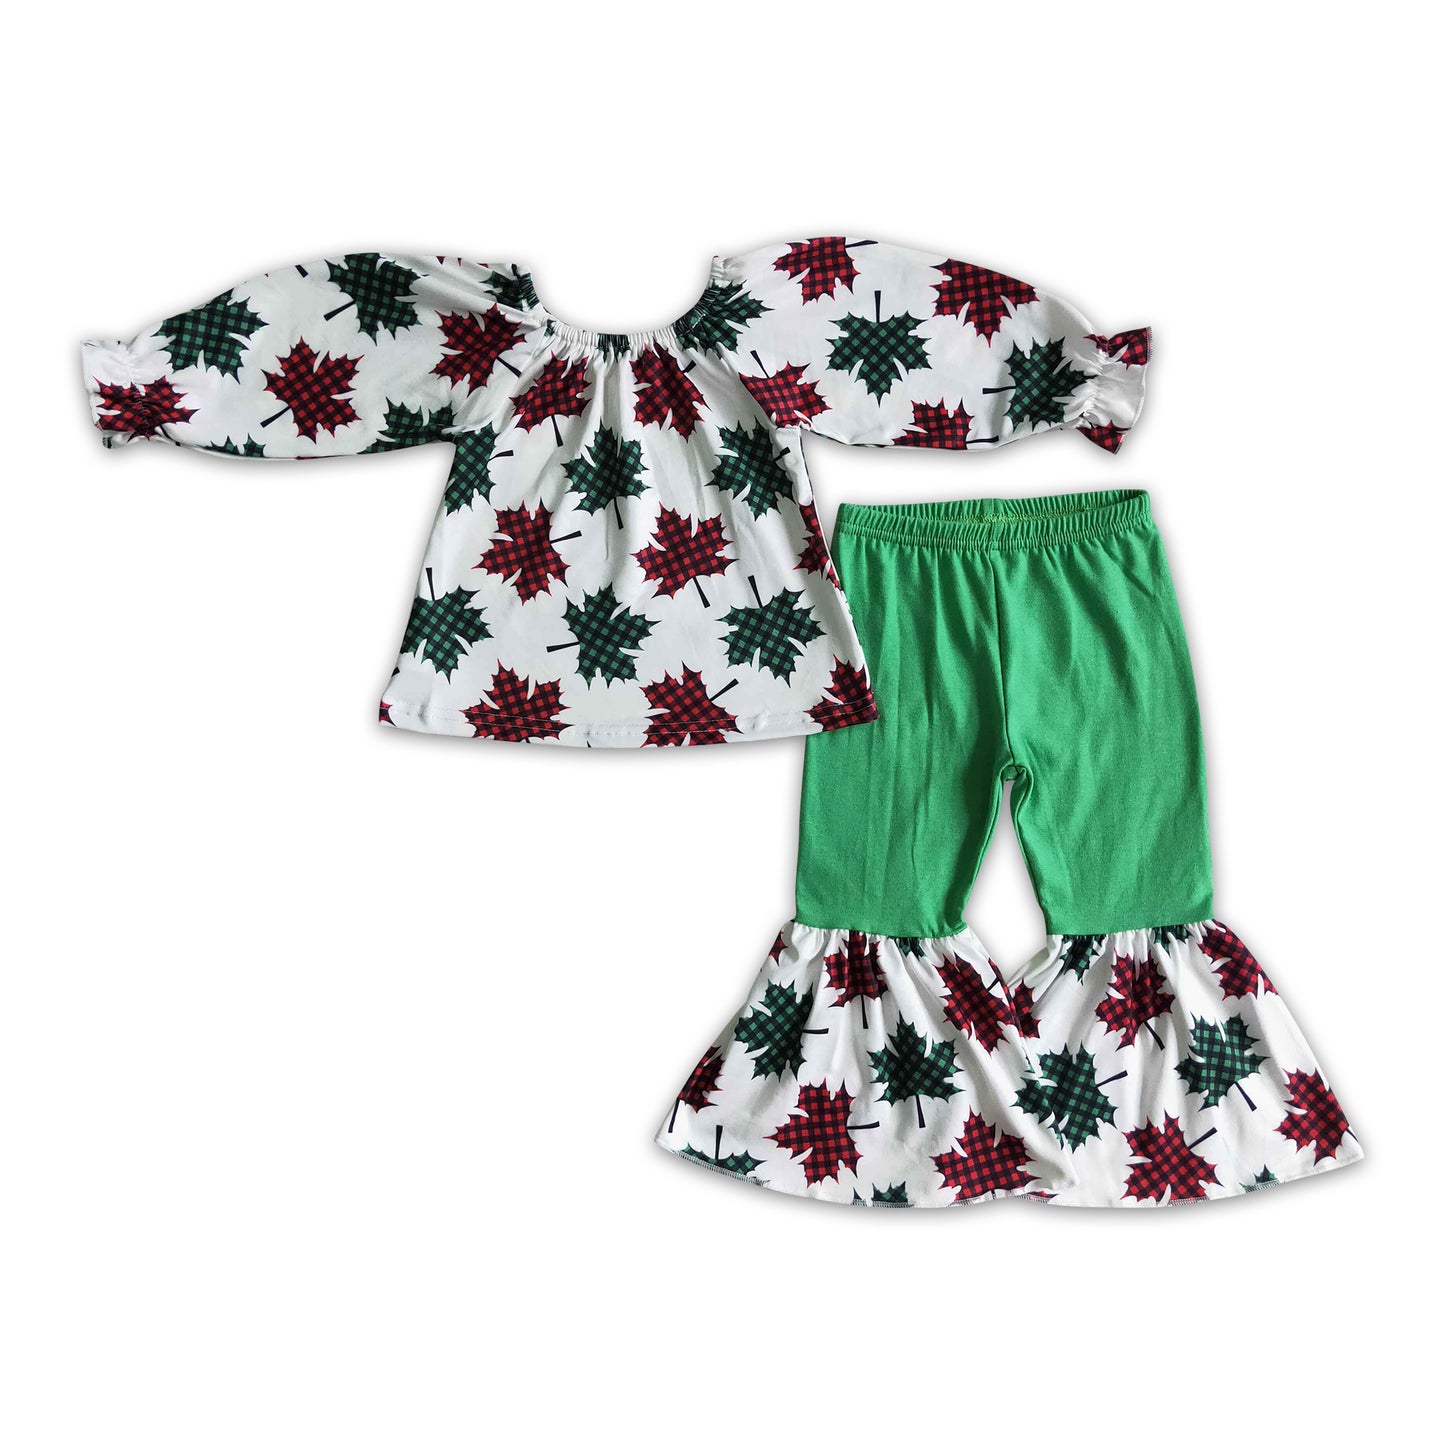 Green red plaid leaves girls Christmas clothing set